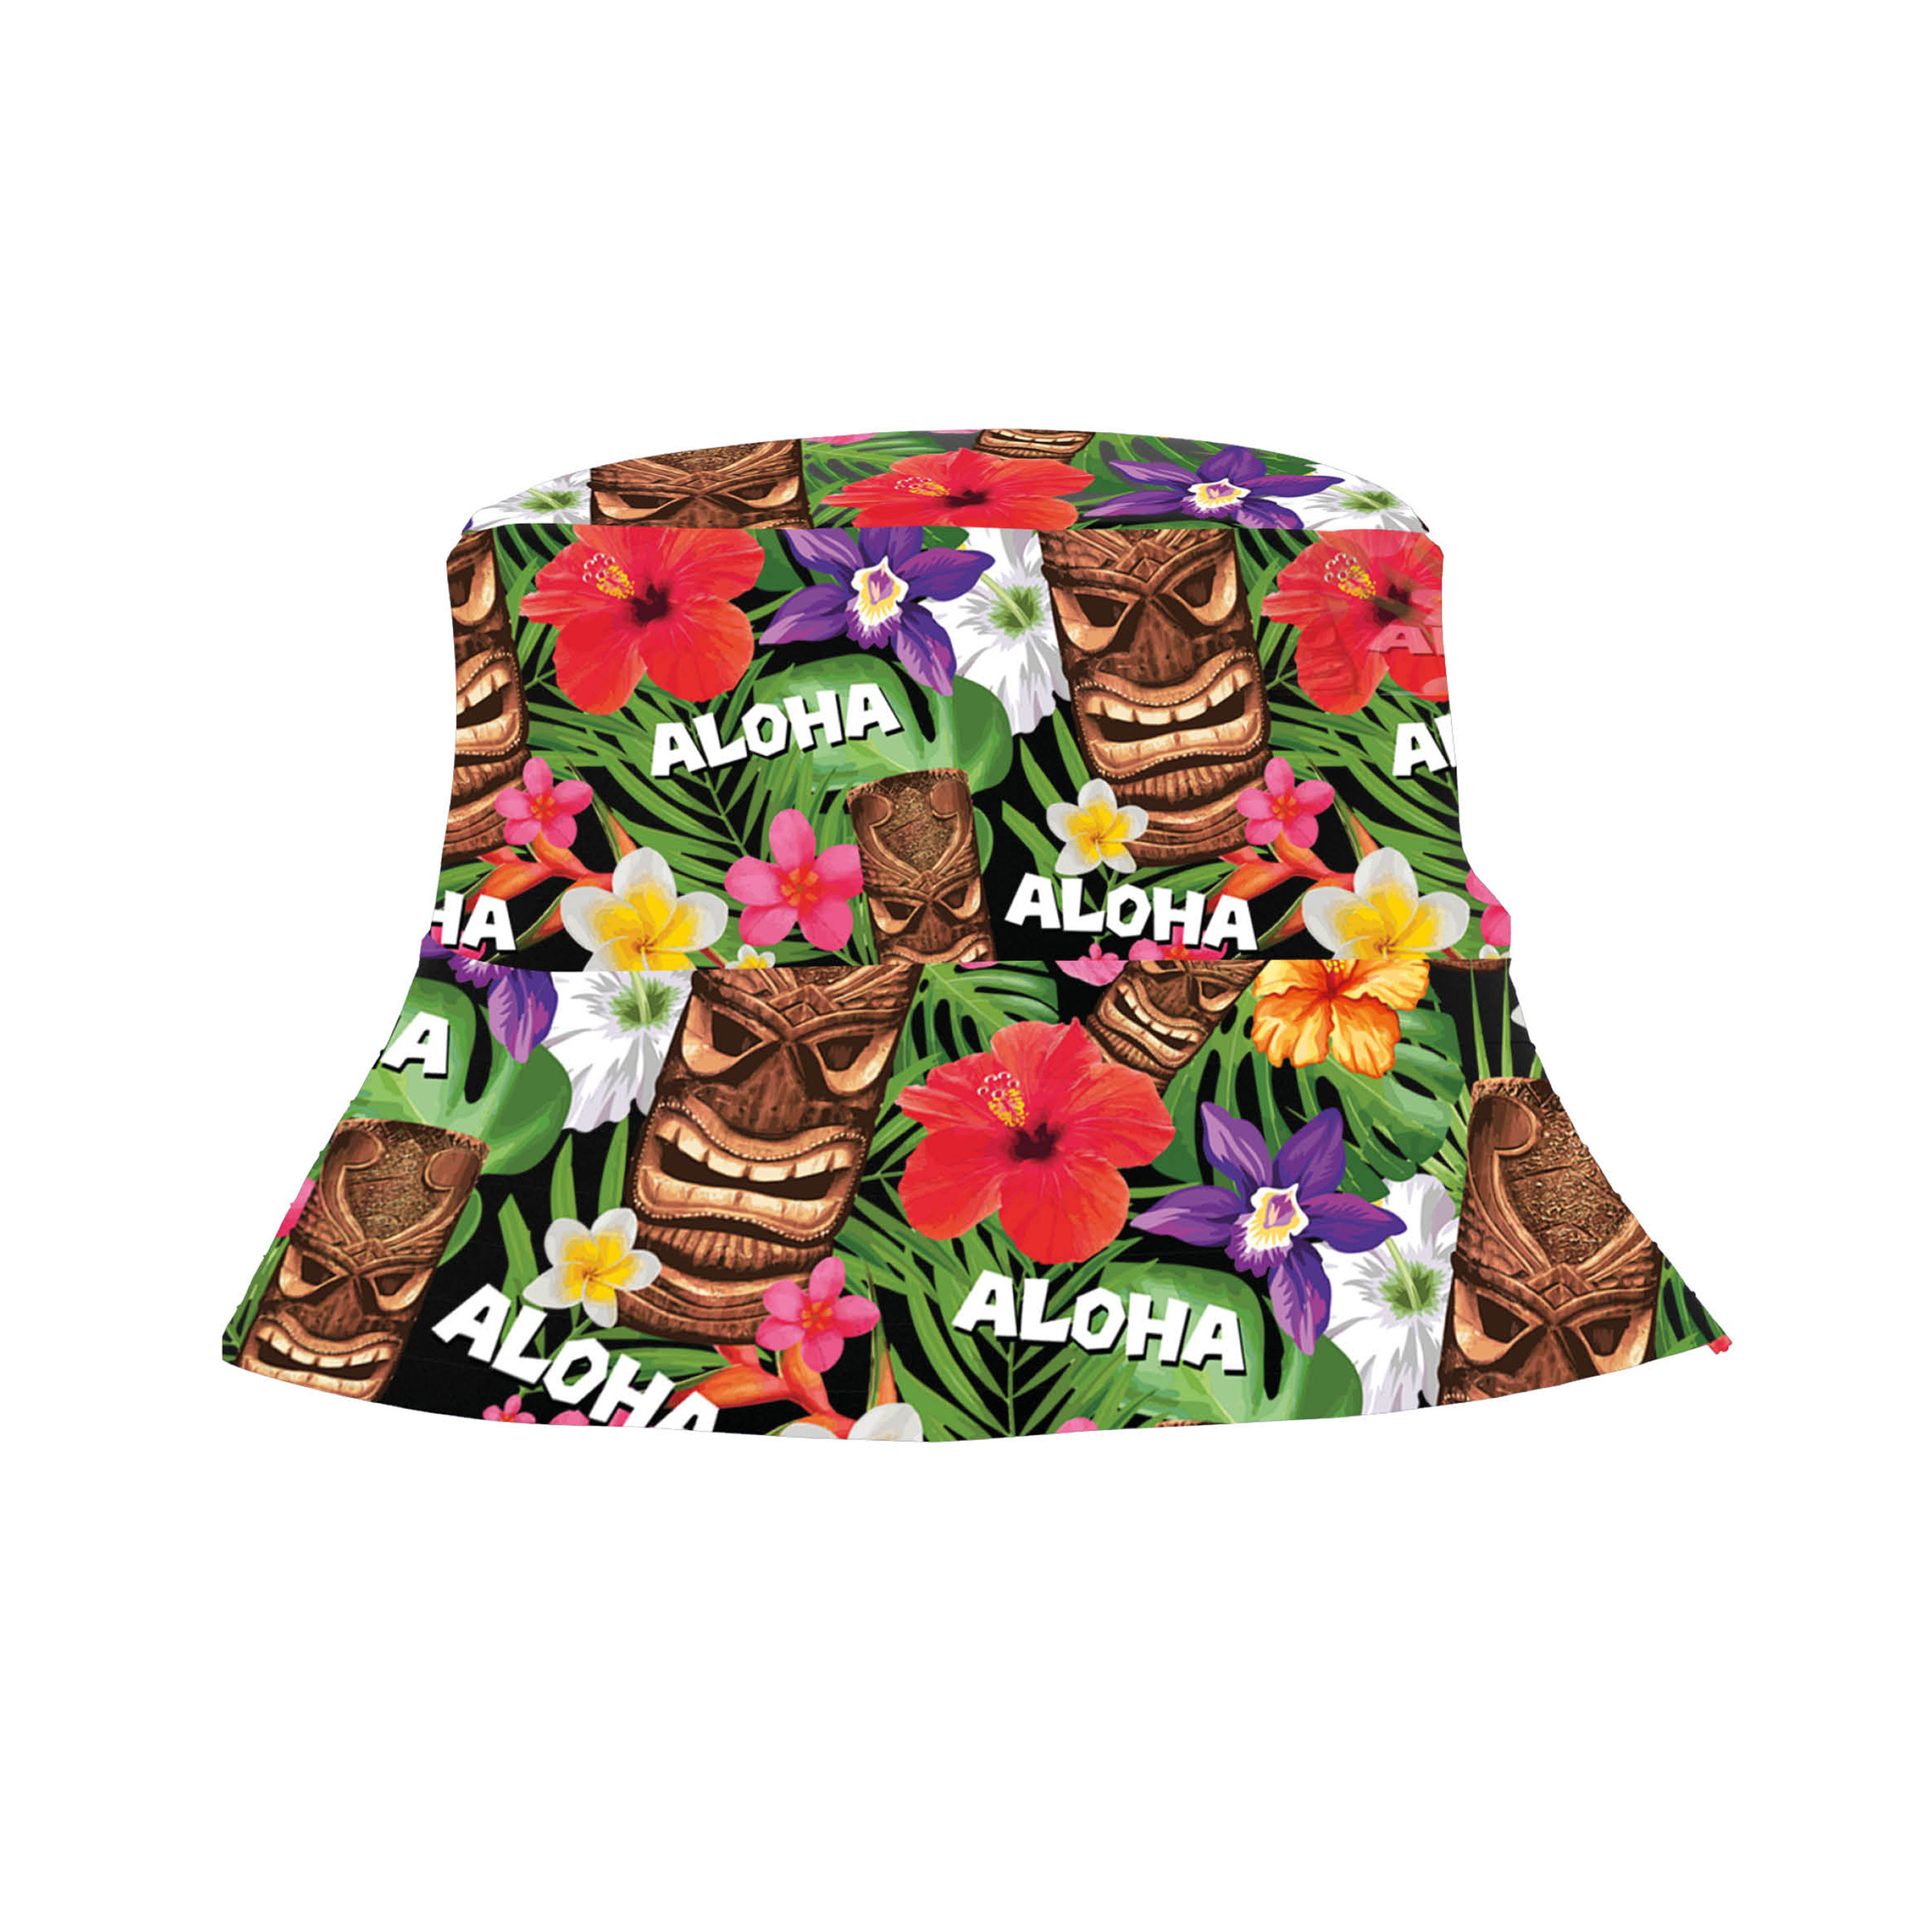 Toppers - Verkleed hoedje voor Tropical Hawaii party - Summer/jungle print - volwassenen - Carnaval/thema fees